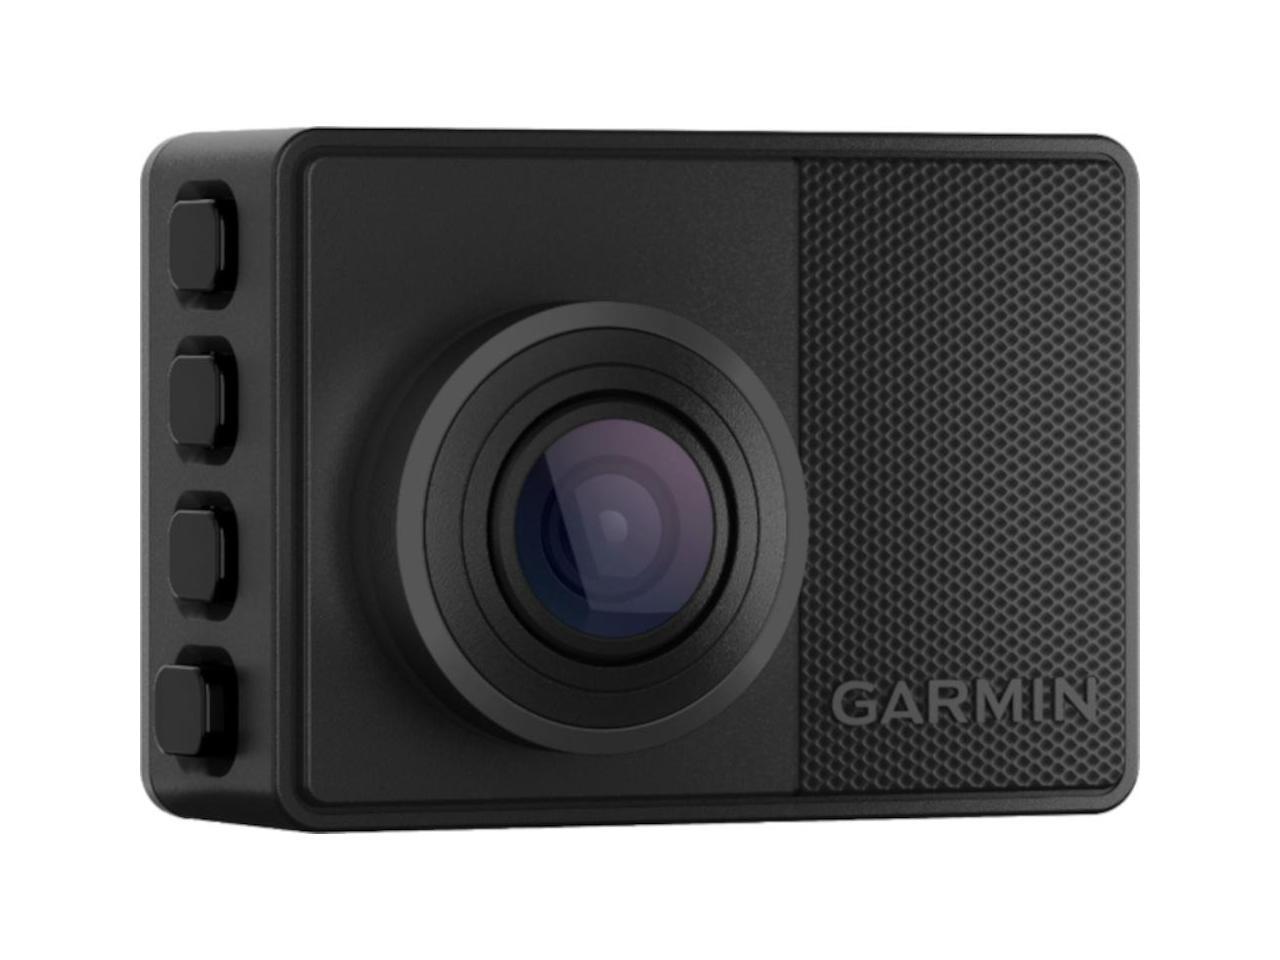 Garmin 67W 1440p Dash Cam, Black #010-02505-05 - image 18 of 21